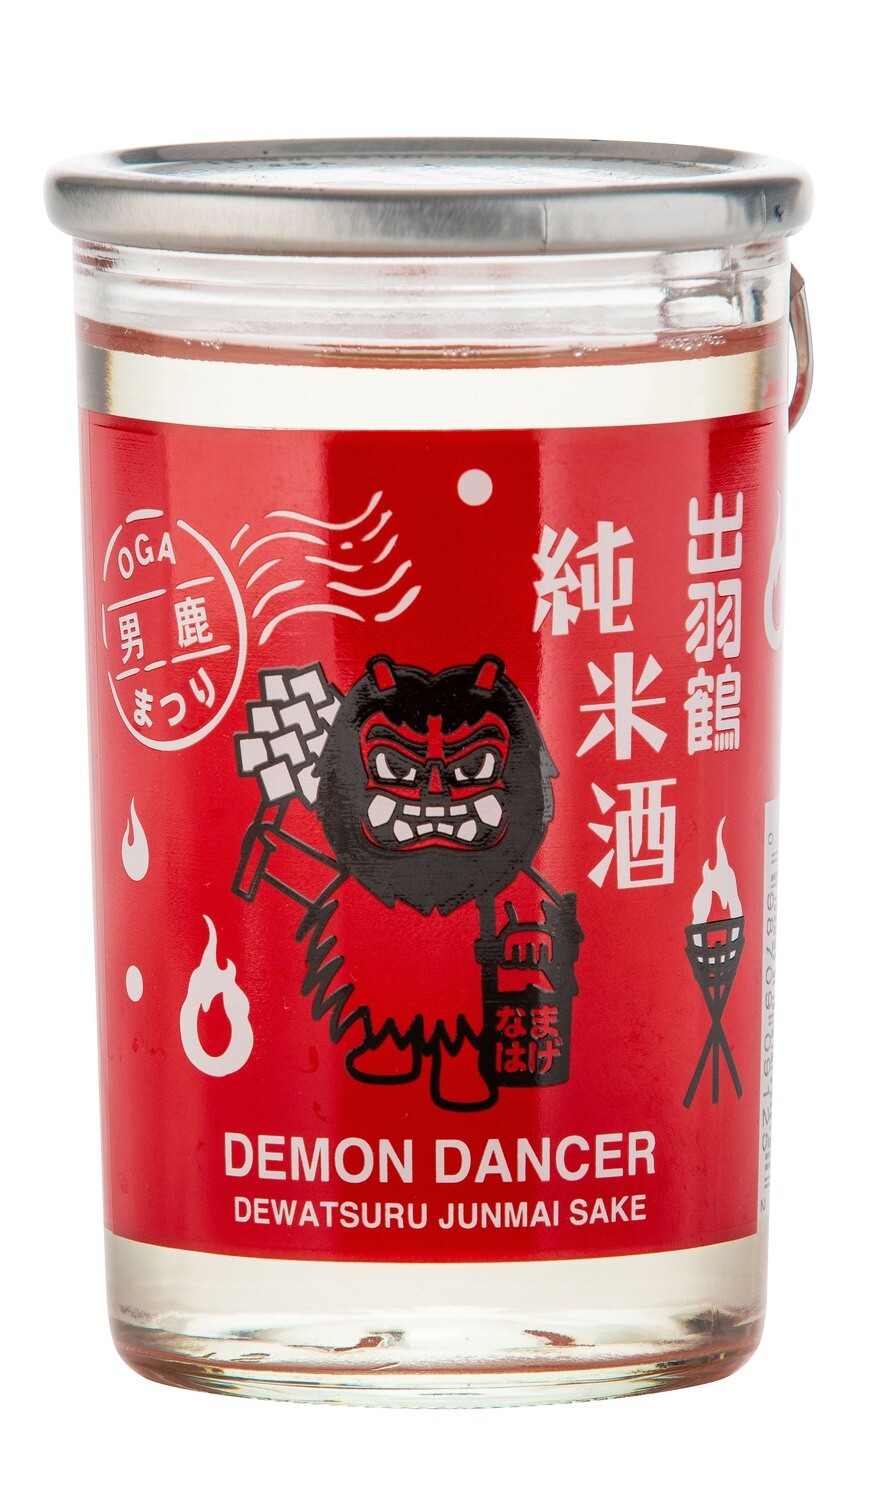 Wine / Sake / Dewatsuru Demon Dancer Sake